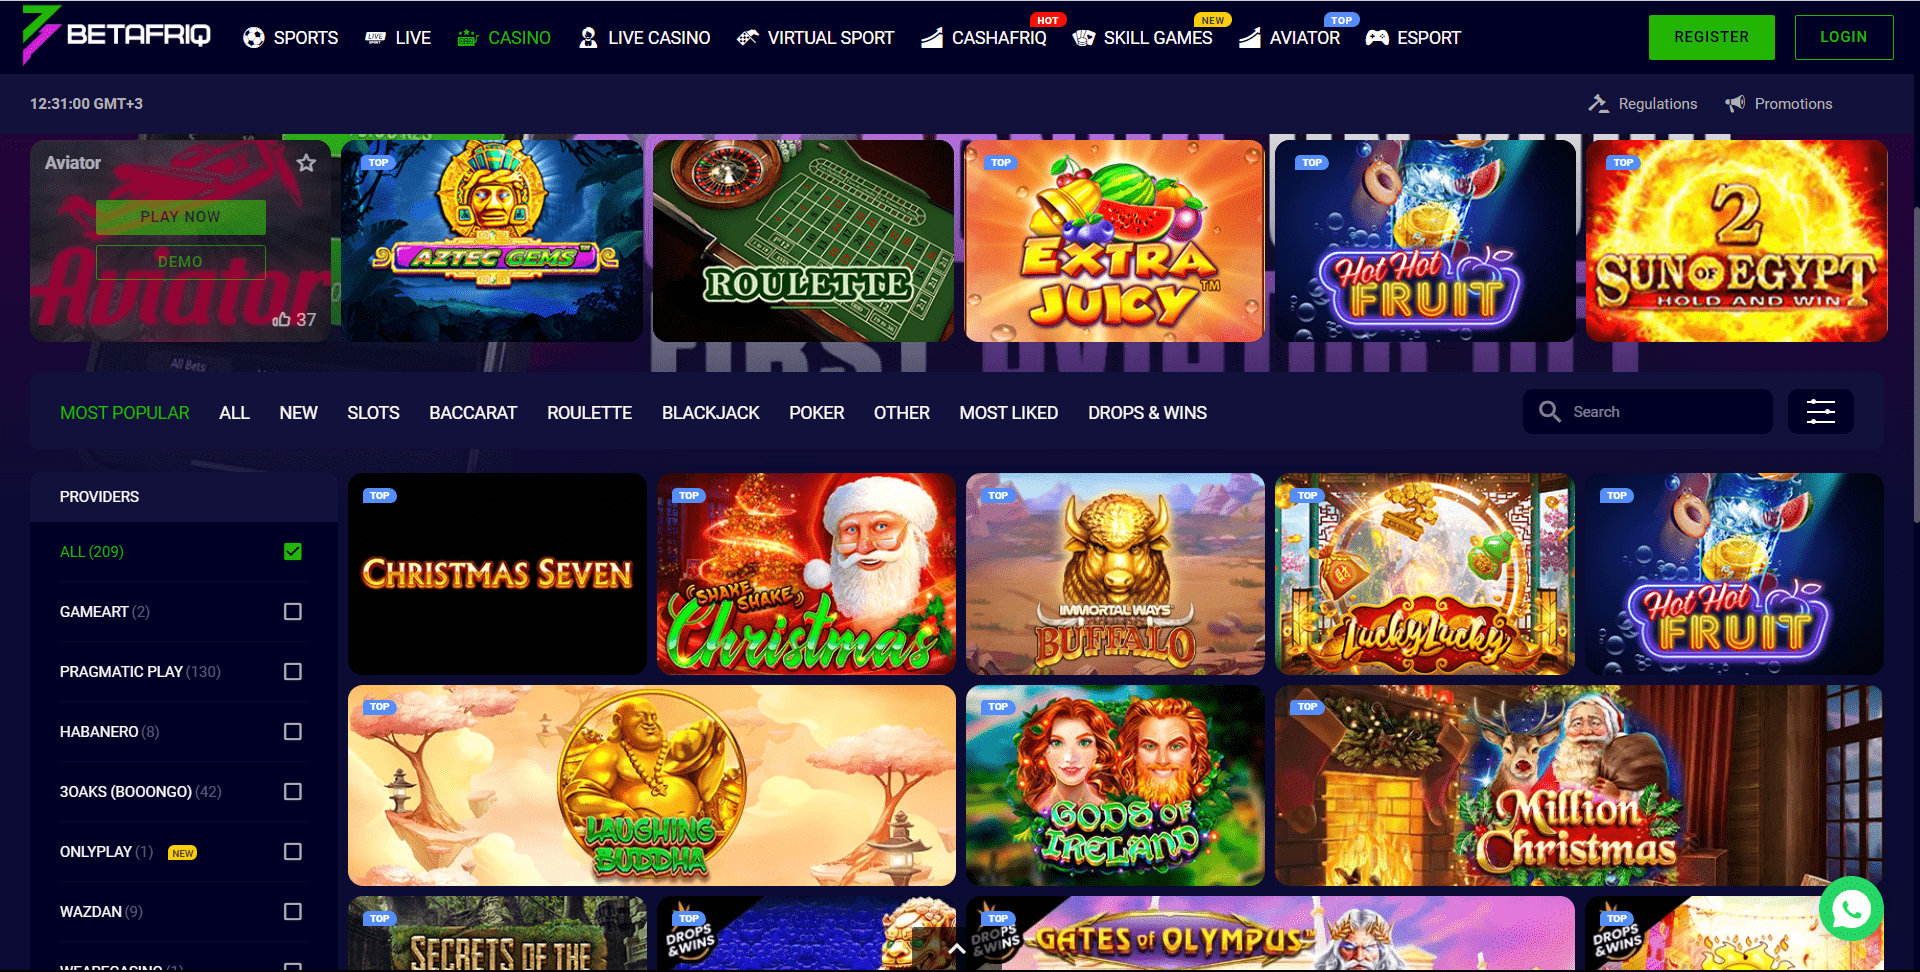 An image of the BetAfriq Casino games